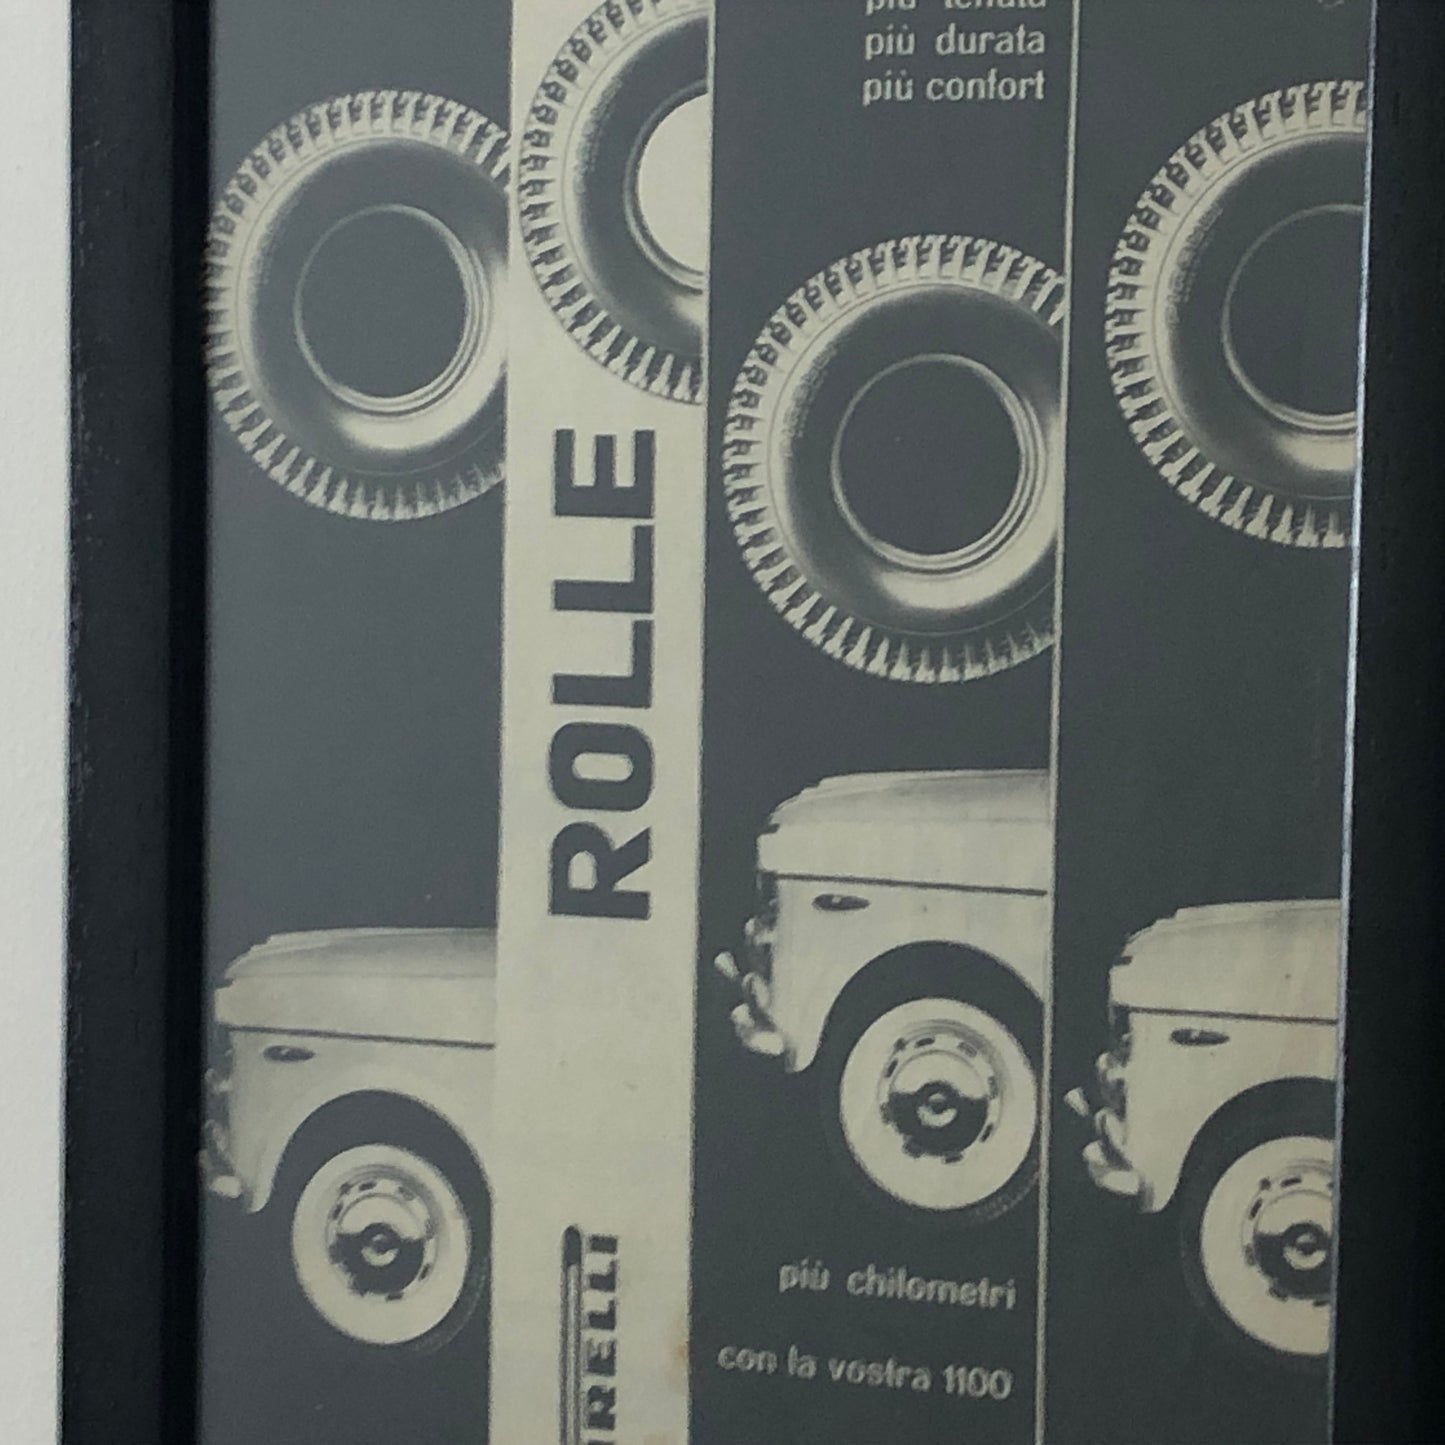 Pirelli, 1959 Advertising Pirelli Rolle Tires with Caption in Italian.